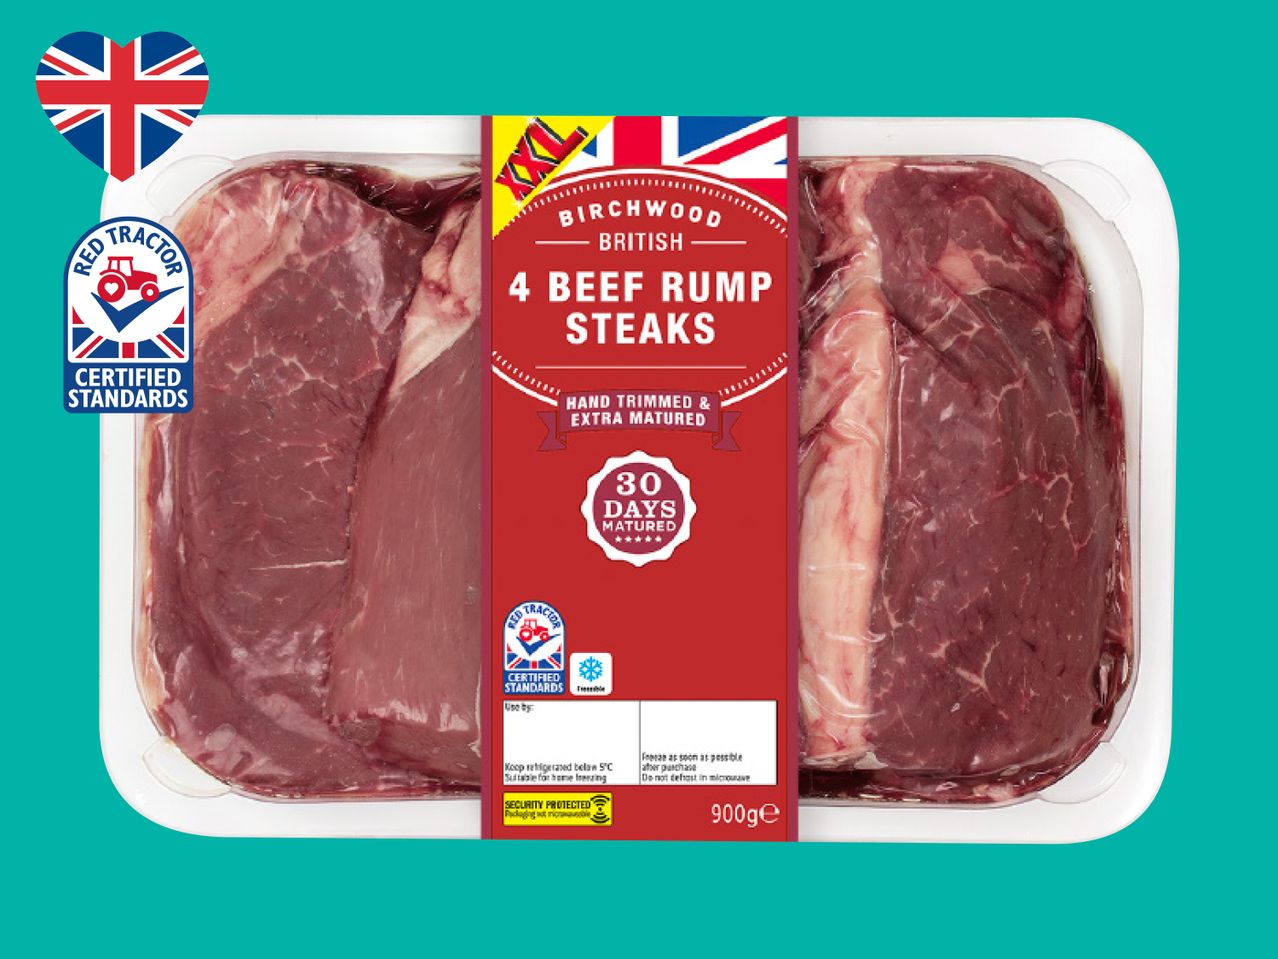 Go to full screen view: Birchwood 4 British Beef Rump Steaks - Image 1